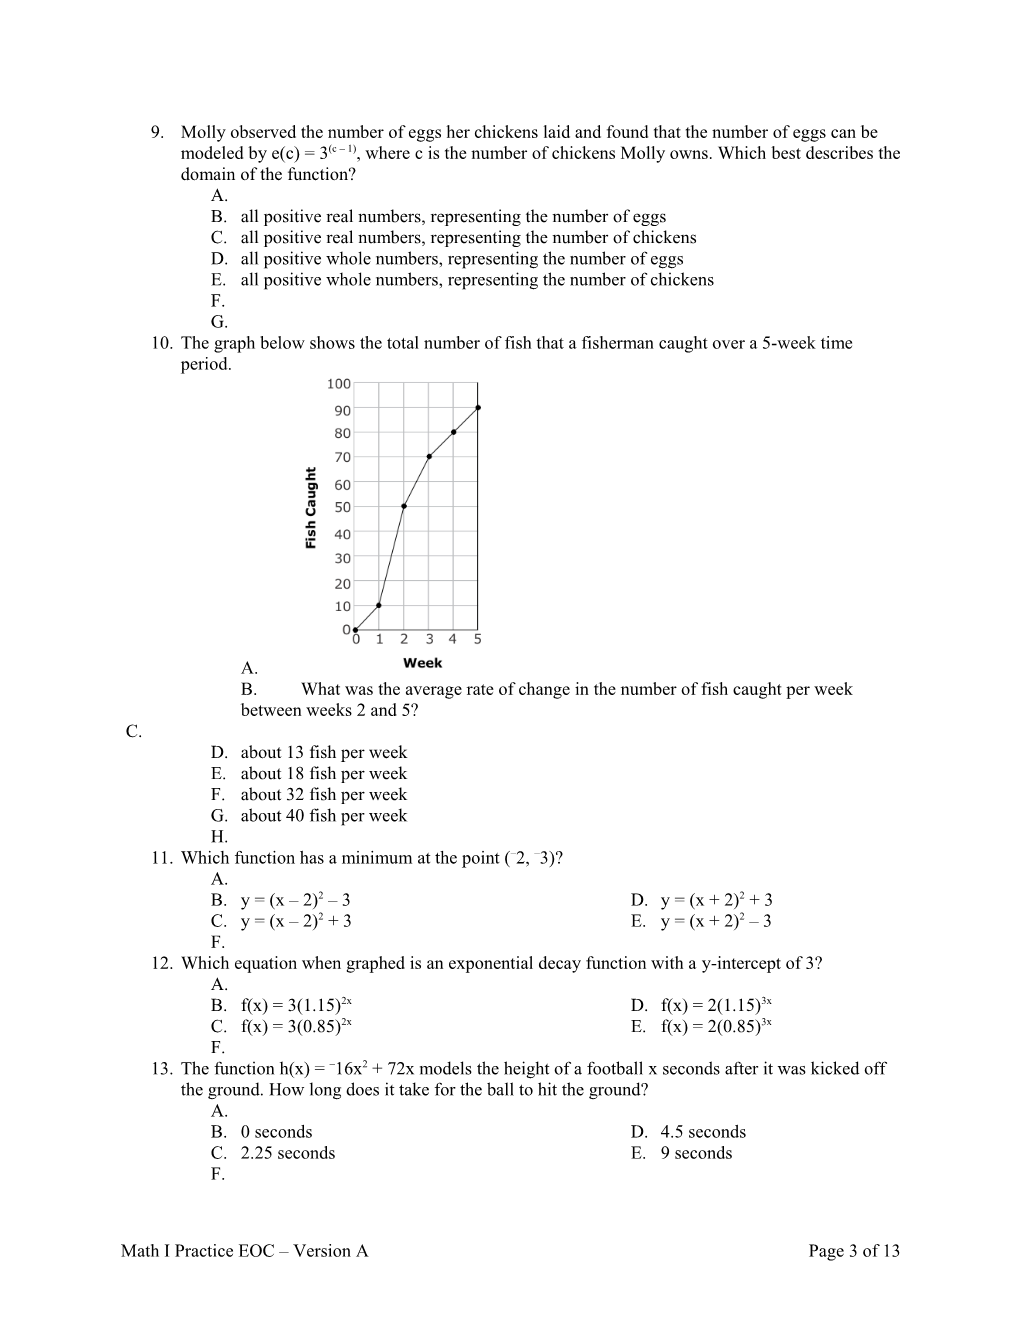 Math I Practice EOC Version A